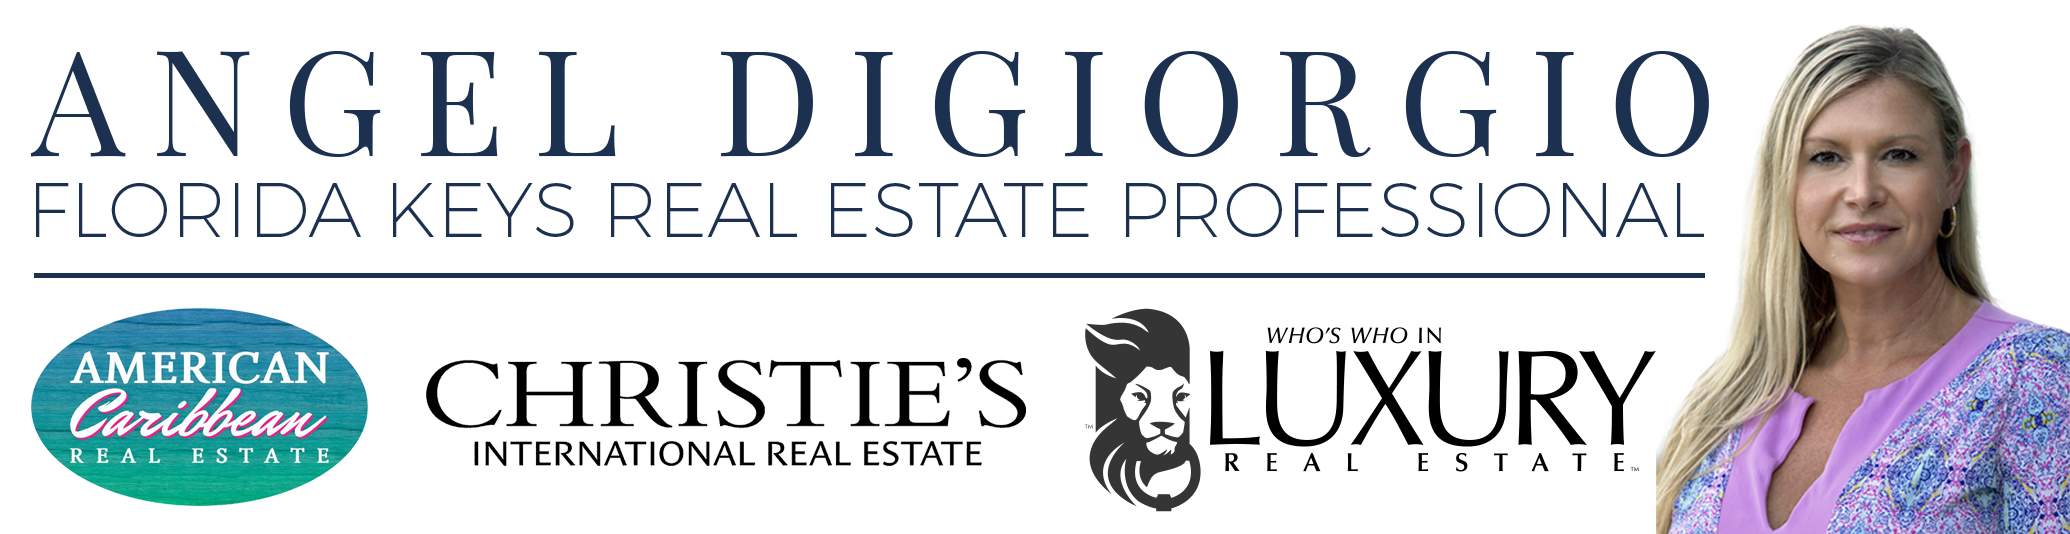 Banner for Angel Digiorgio Florida Keys Real Estate Professional